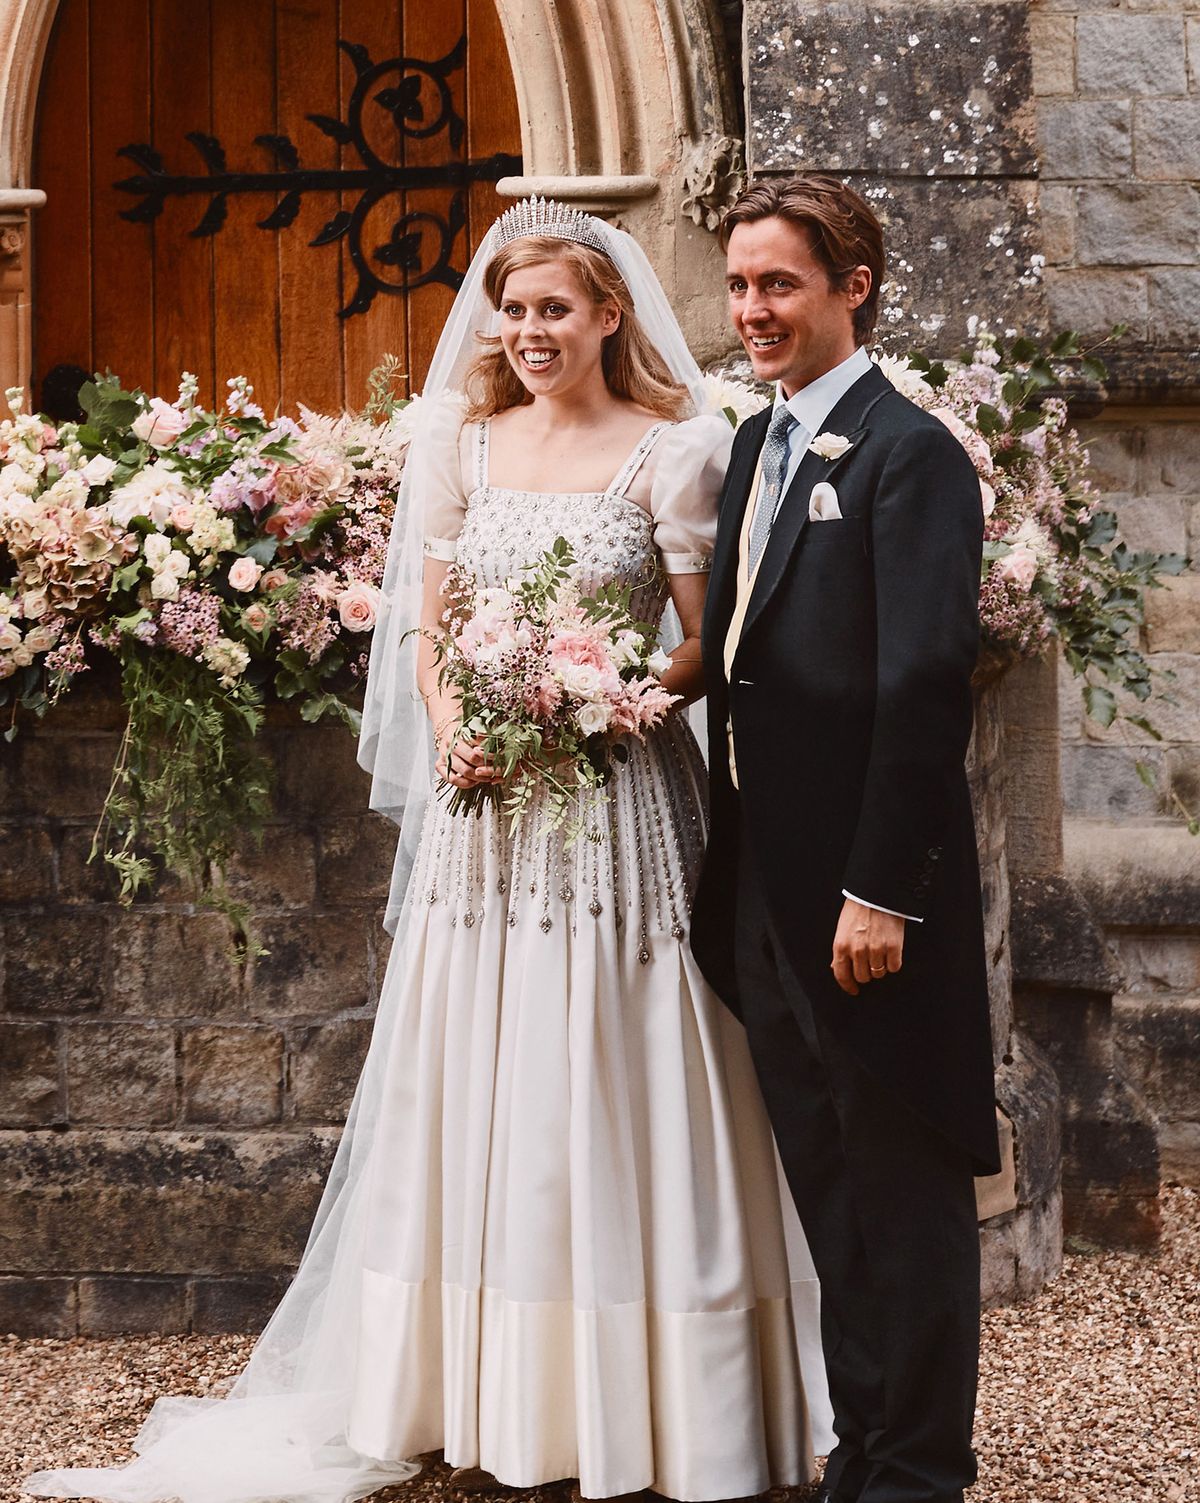 Princess Beatrice's Wedding Dress: Details, Designer, & More